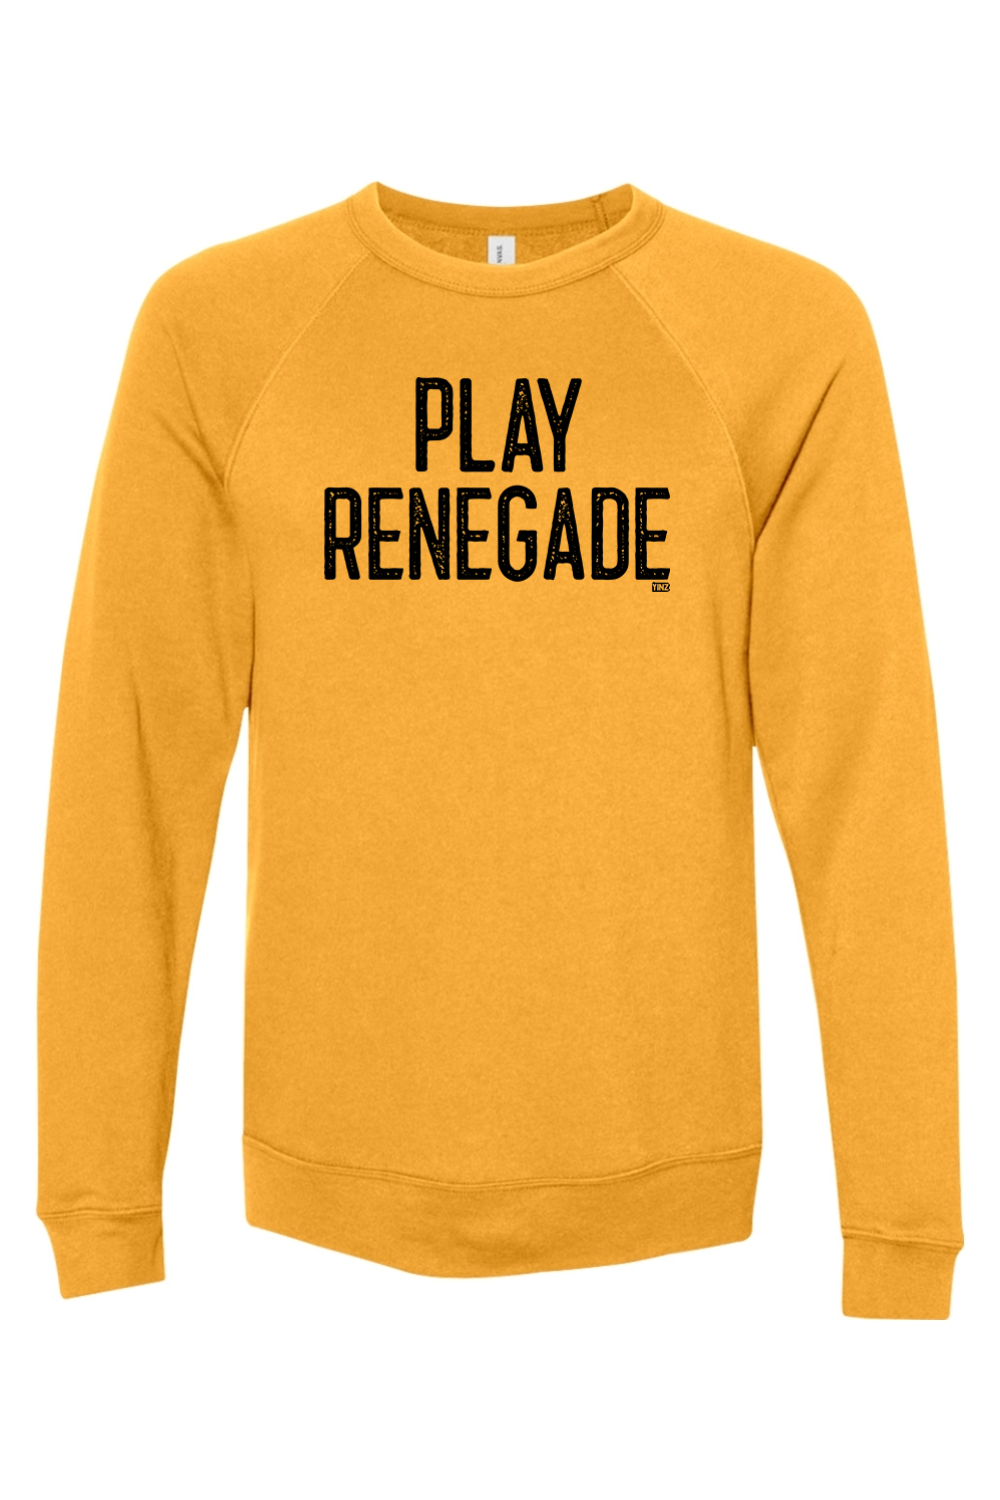 Play Renegade Reverse Retro -  Gameday Crewneck Sweatshirt - Yinzylvania